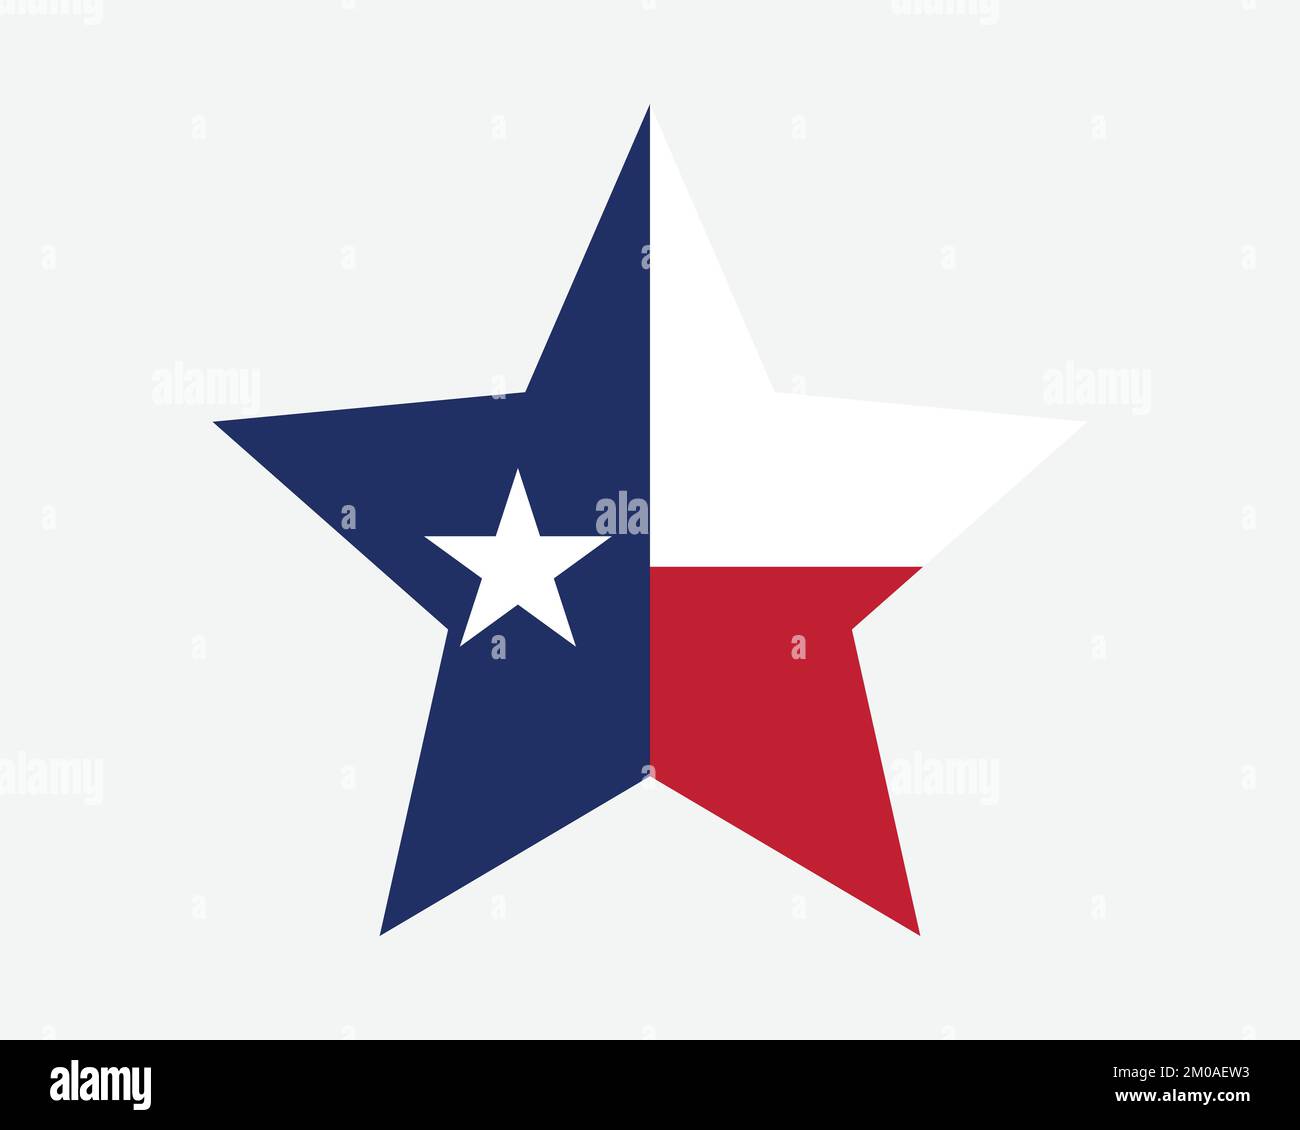 Die Sternenflagge Von Texas. TX USA 5-Punkt-Statusflagge in Sternform. Texan US Lone Star Banner Symbol Vector Flat Artwork Graphic Illustration Stock Vektor